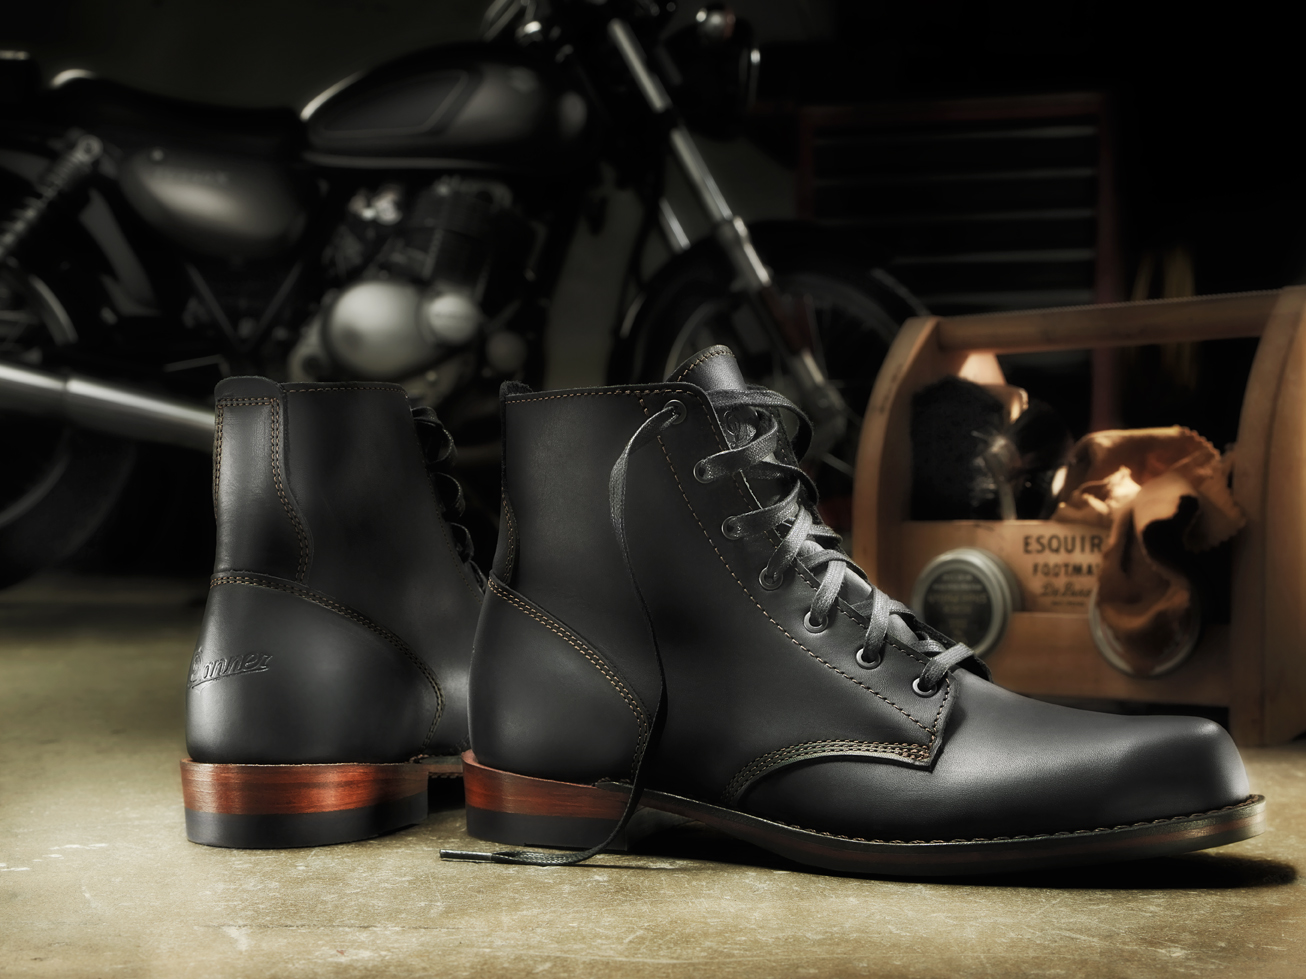 Shoe Photography - Danner Boots | Studio 3, Inc.